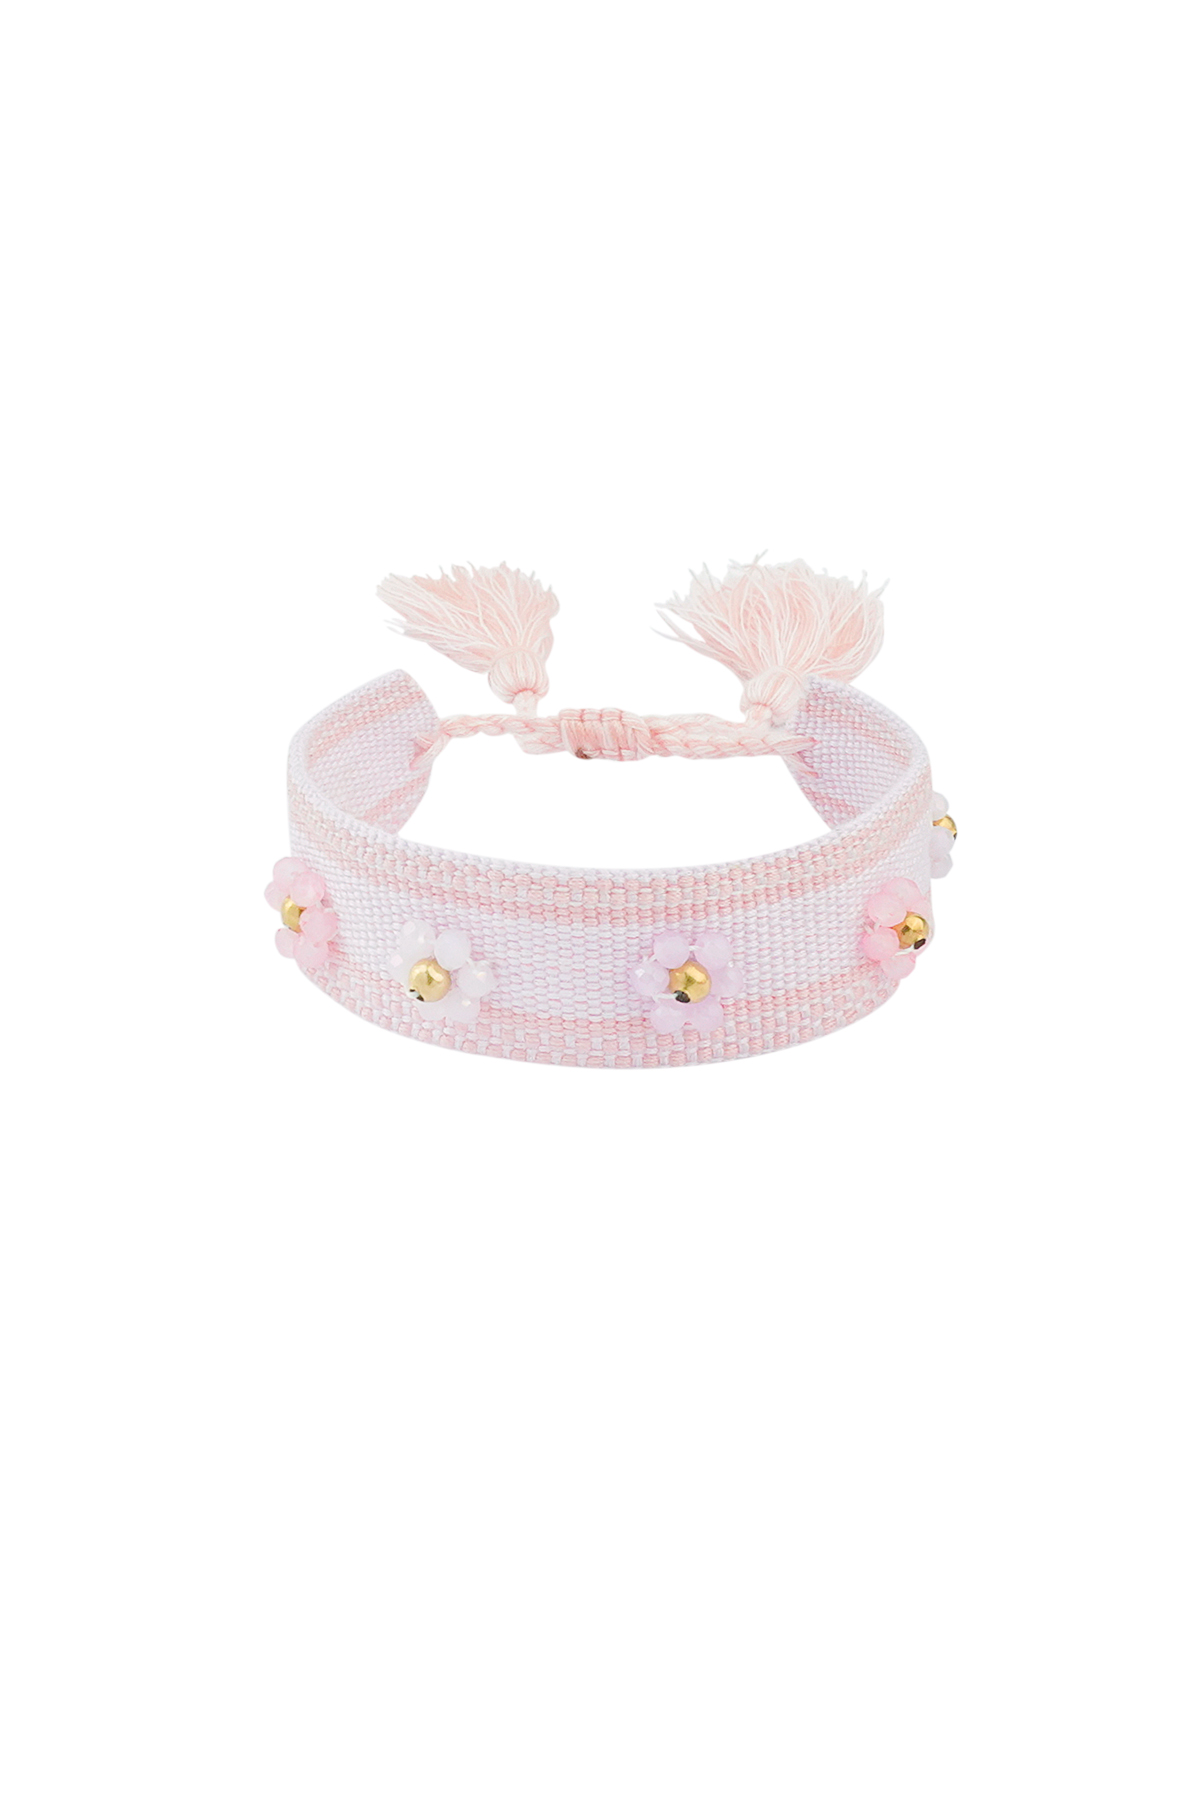 Stoffarmband mit Blumen - hautfarben rosa h5 